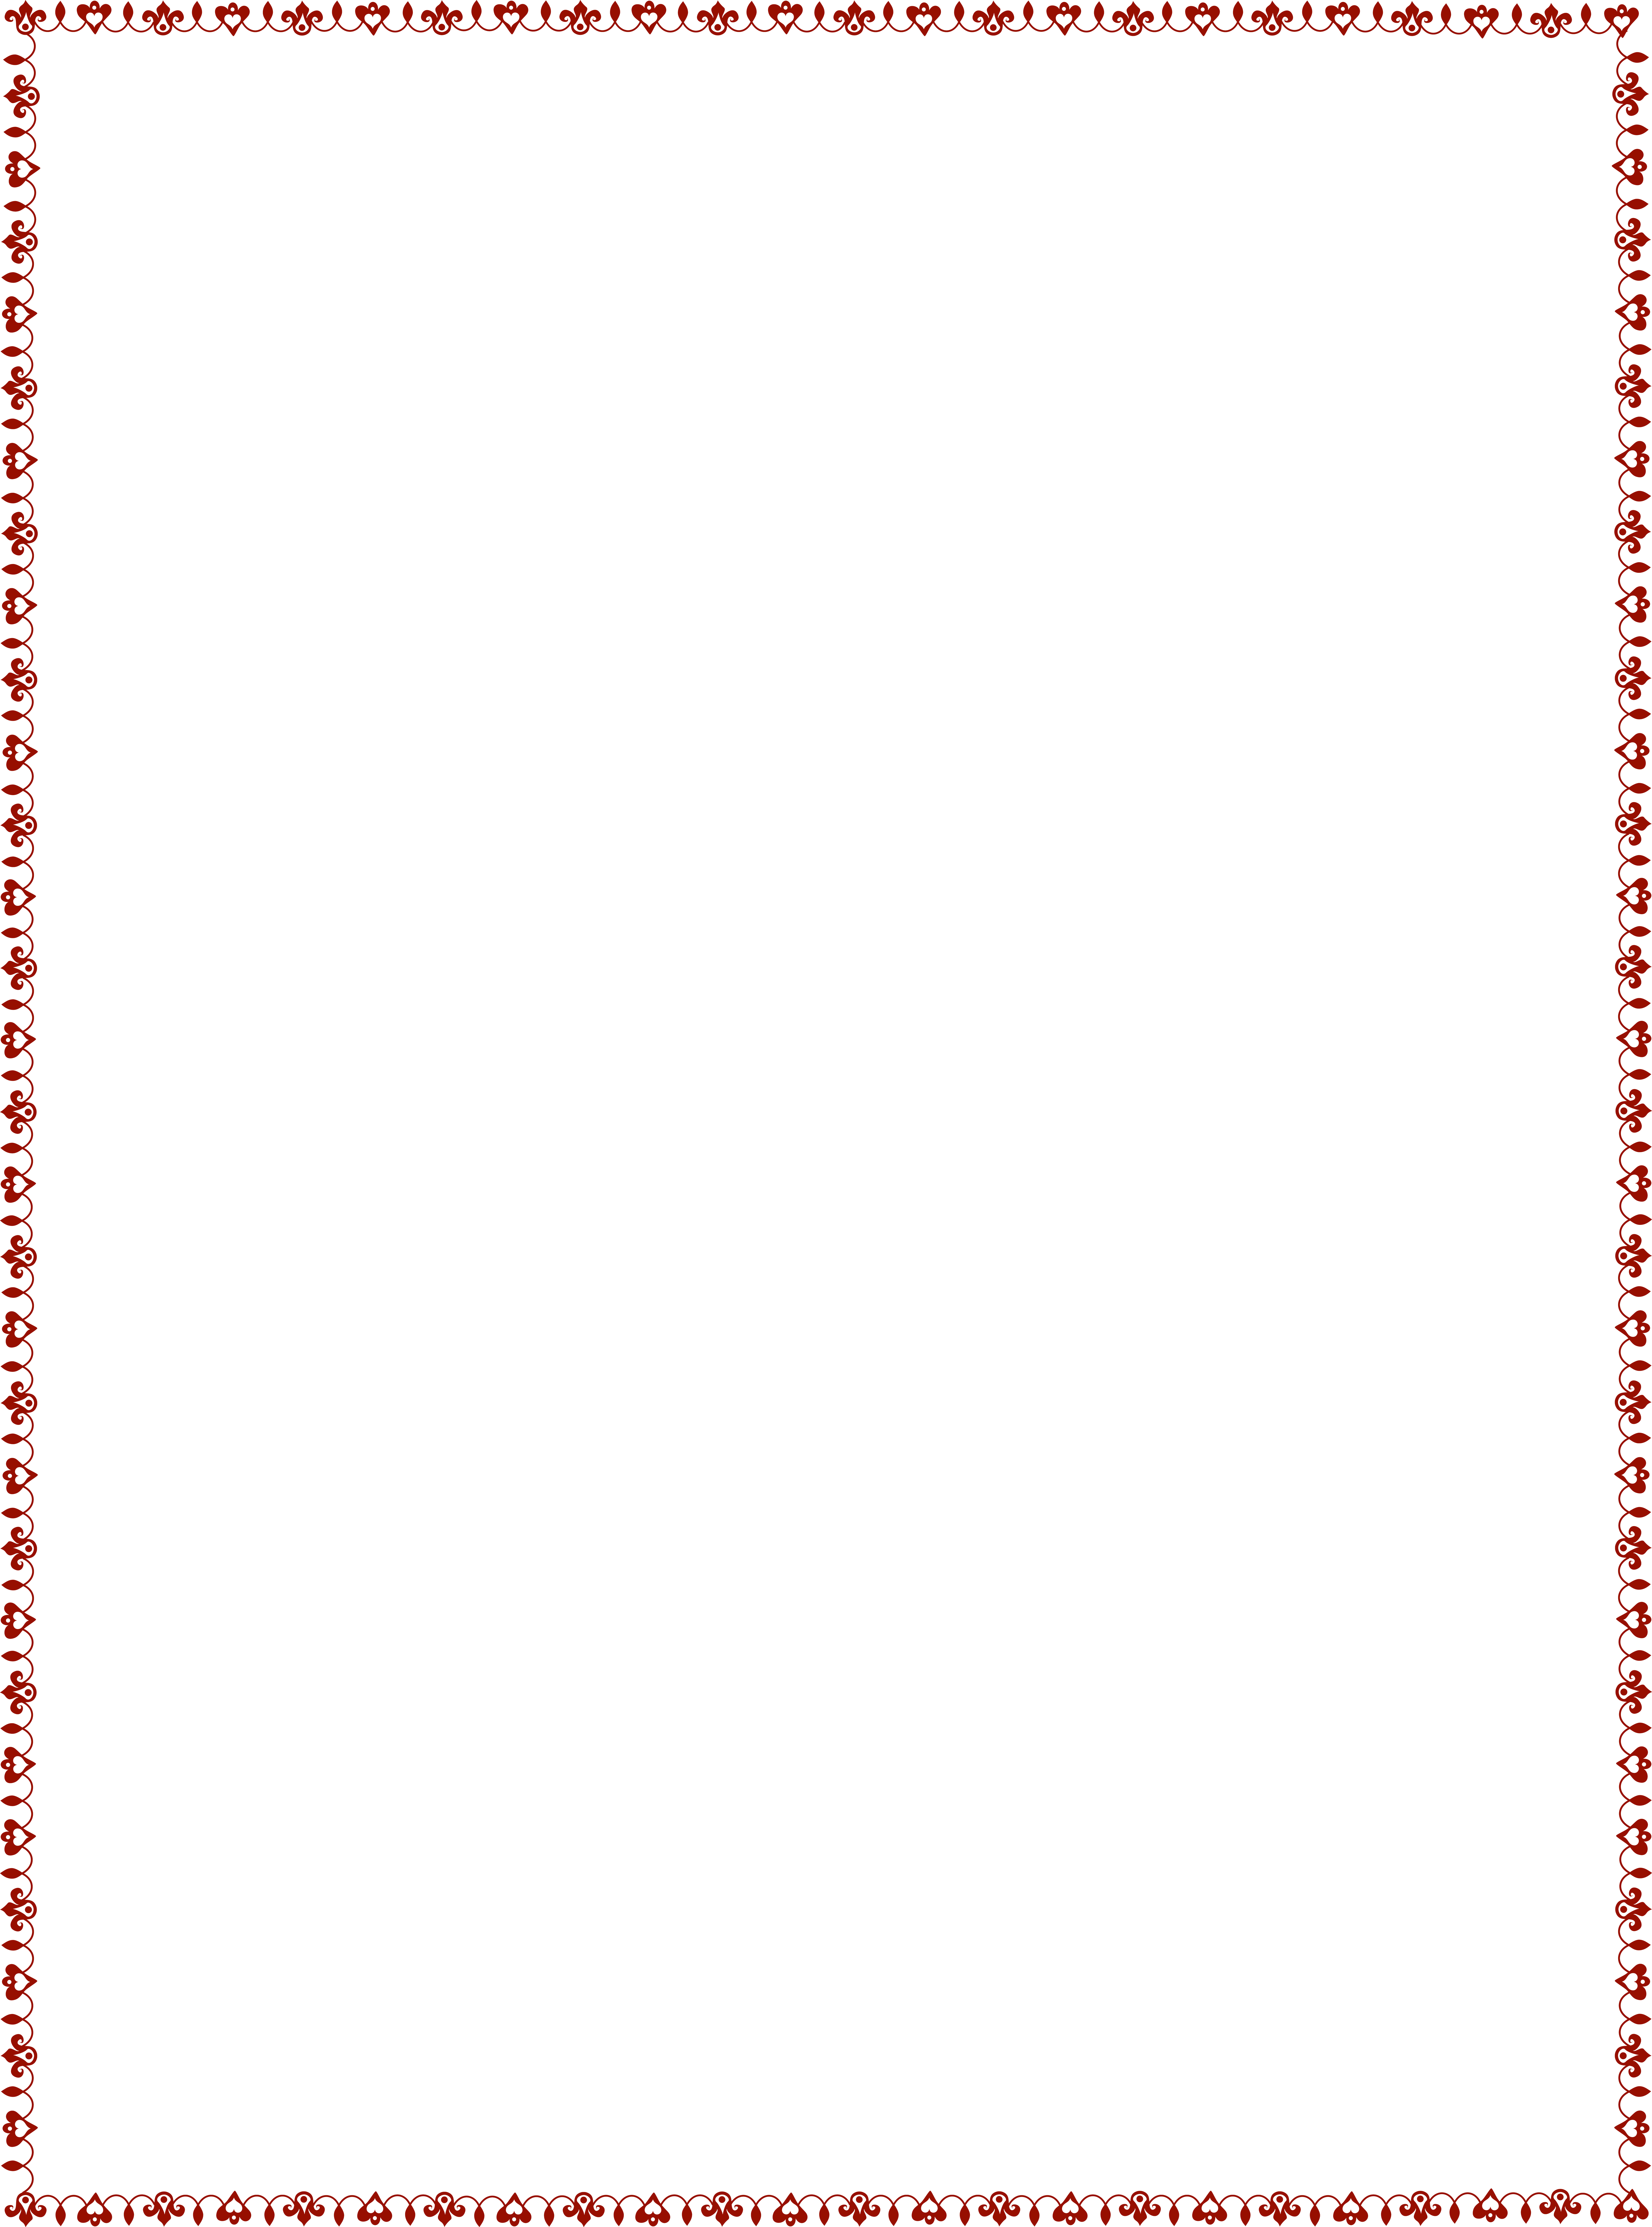 A Black Rectangular Frame With Red Border